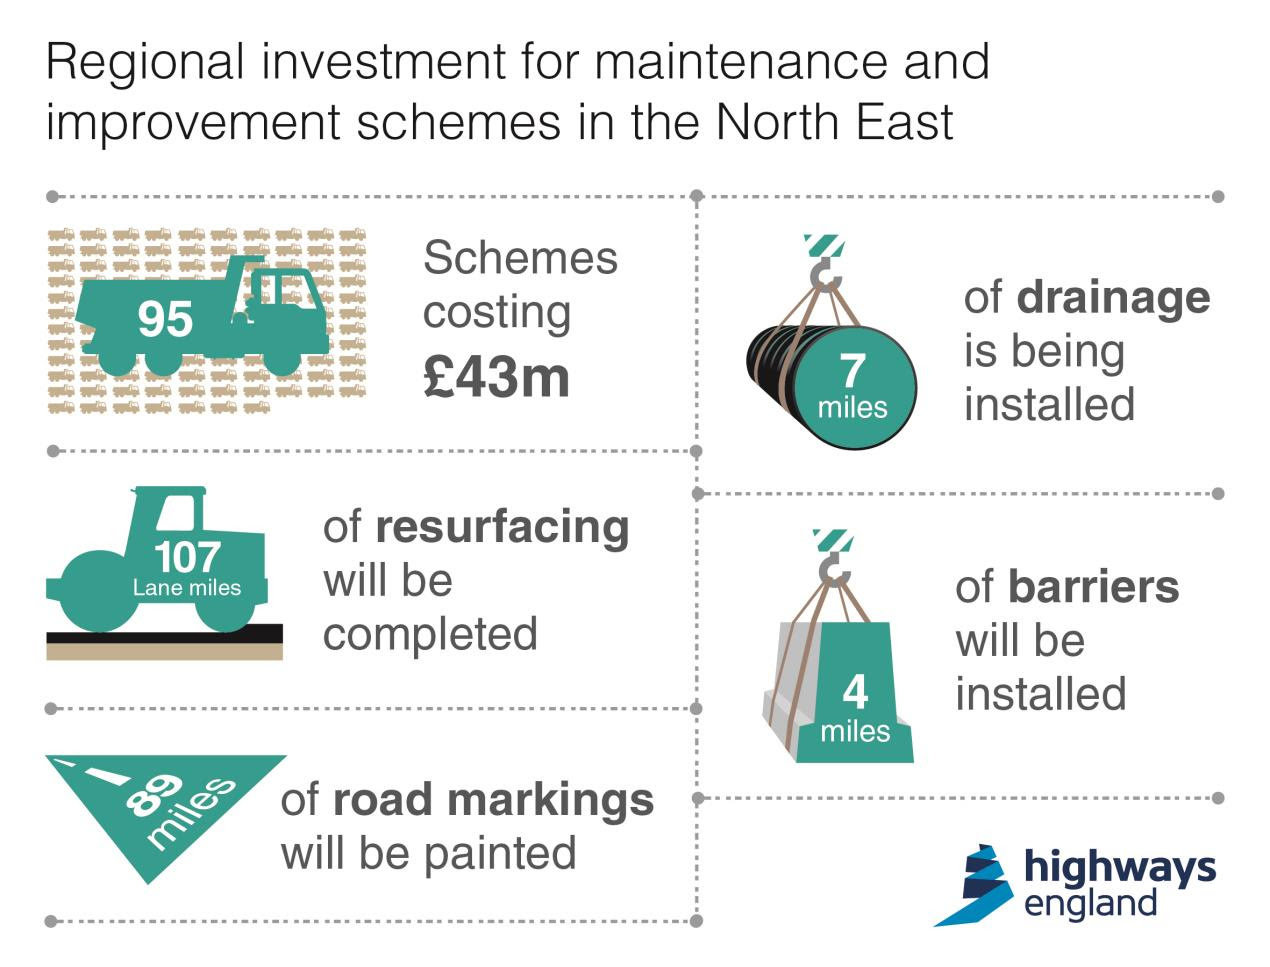 Regional investment for maintenance infographics_N East-04